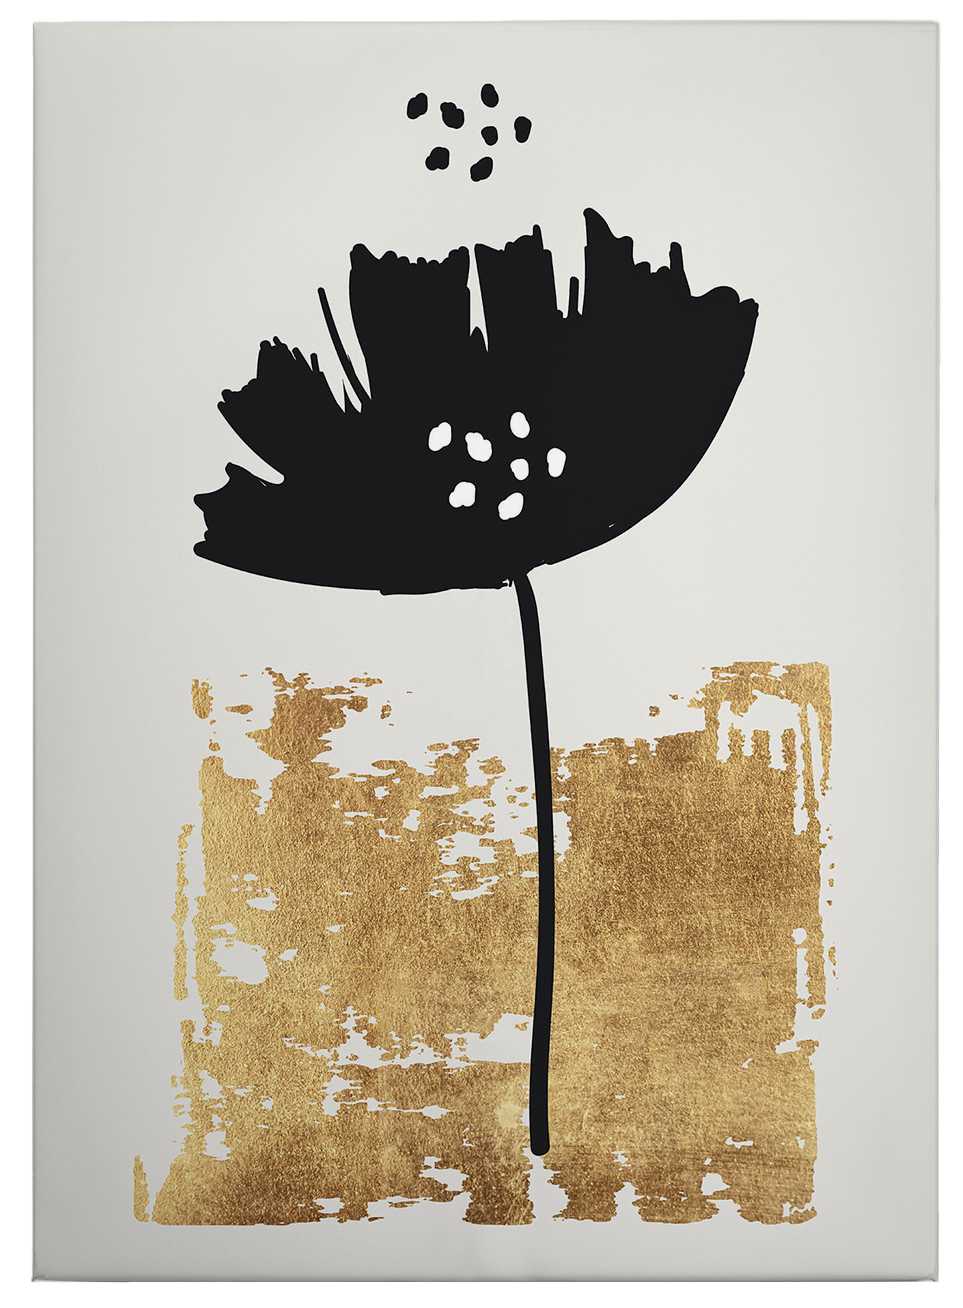             Canvas print "Black flower" by Kubistika – gold, black
        